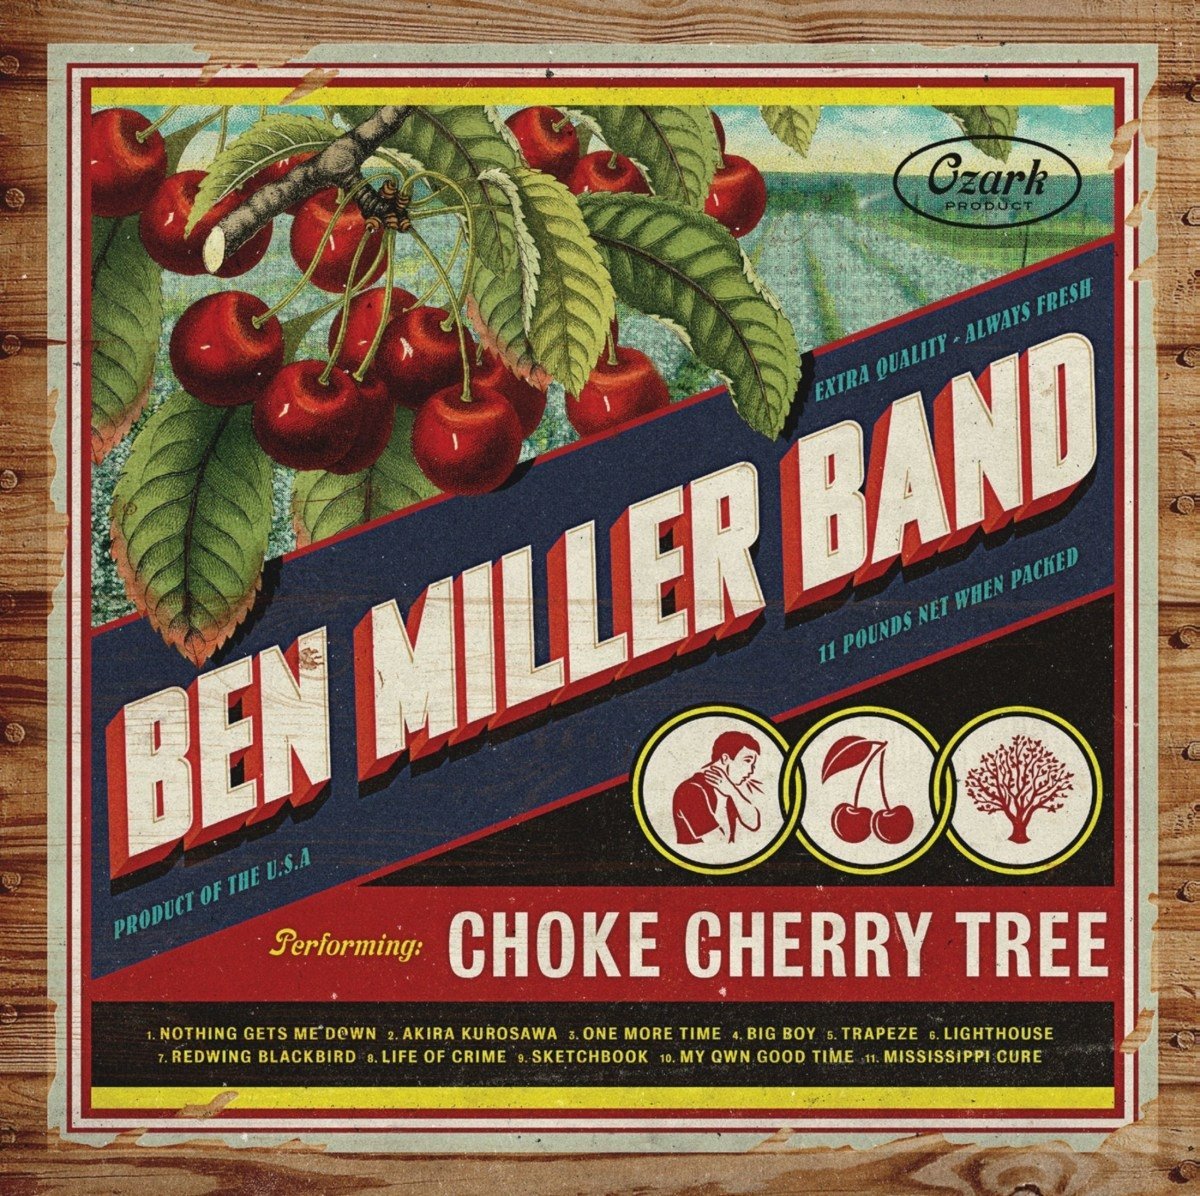 Ben Miller Band: Choke Cherry Tree